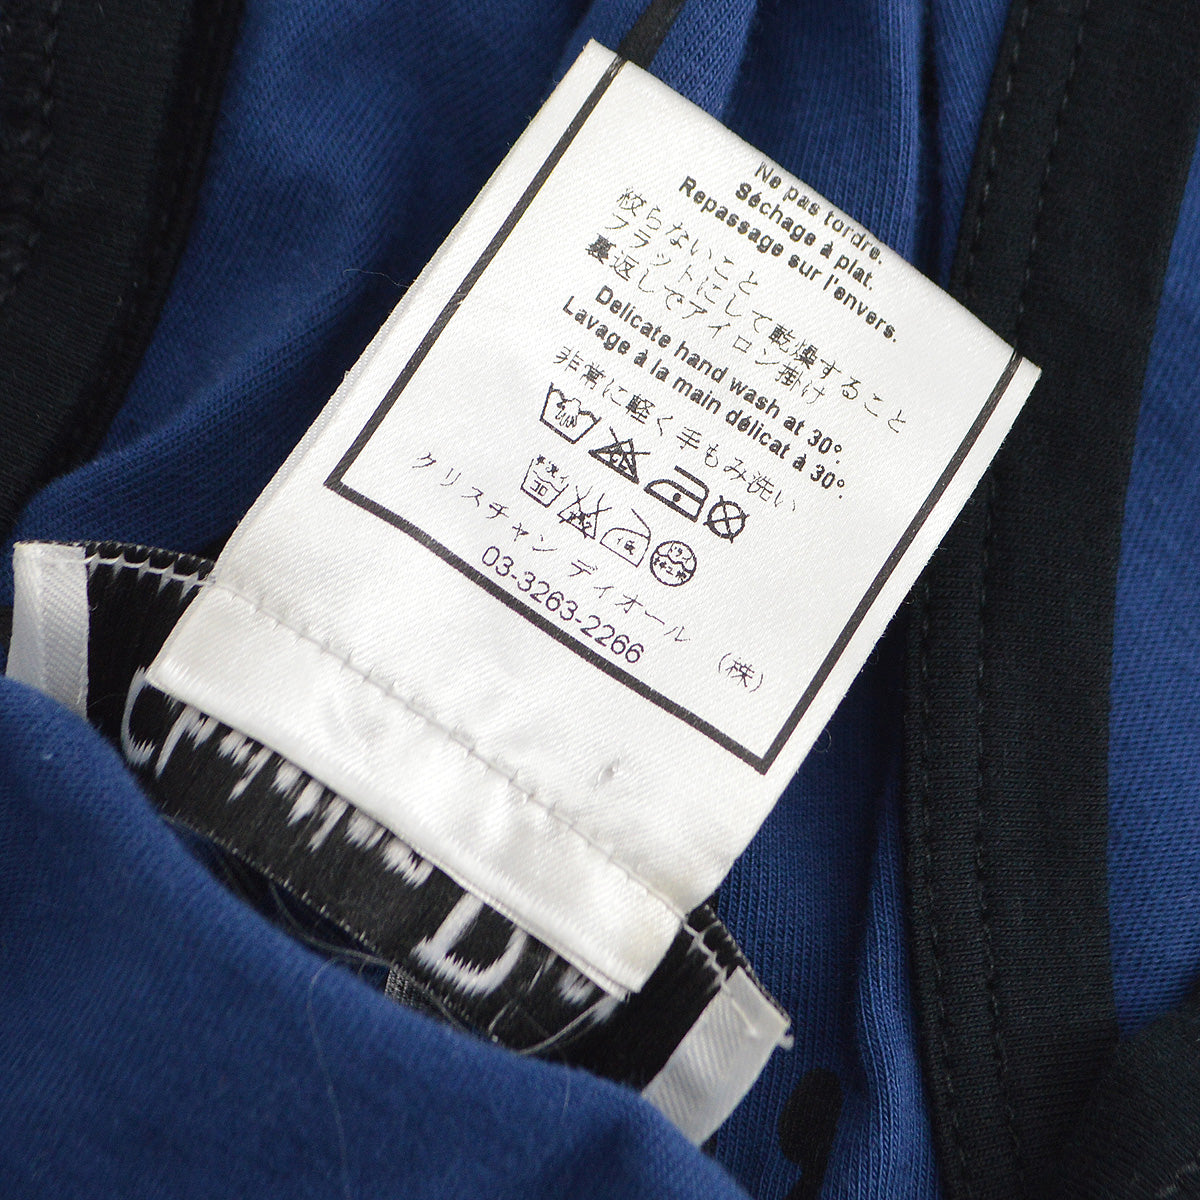 Christian Dior 2002 logo print vest 